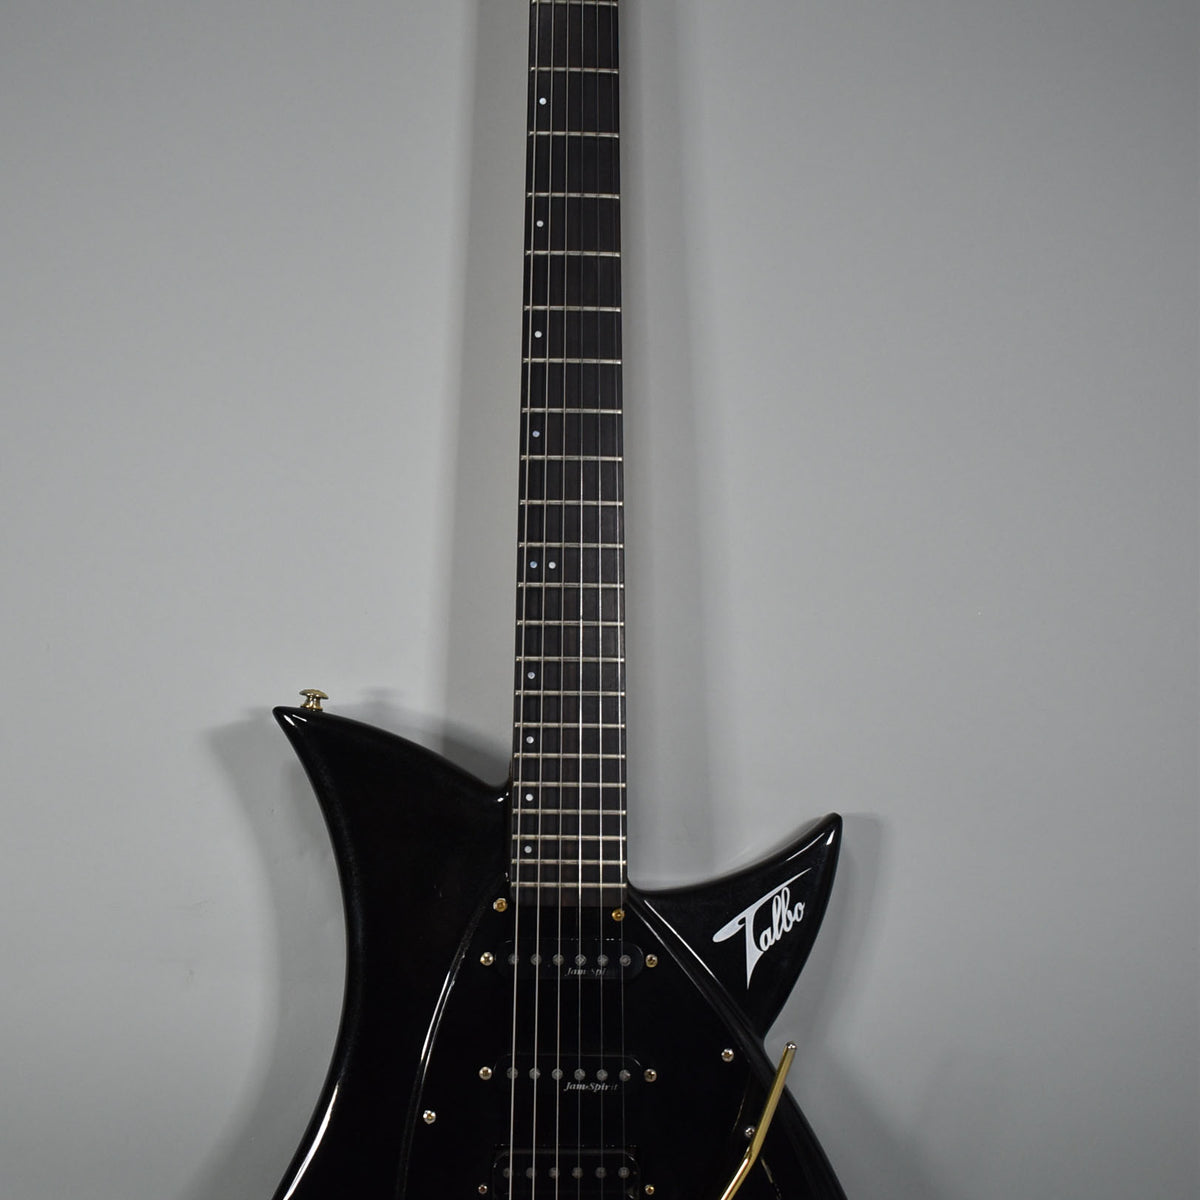 1980s Tokai Talbo Aluminum Body Black Finish Electric Guitar 